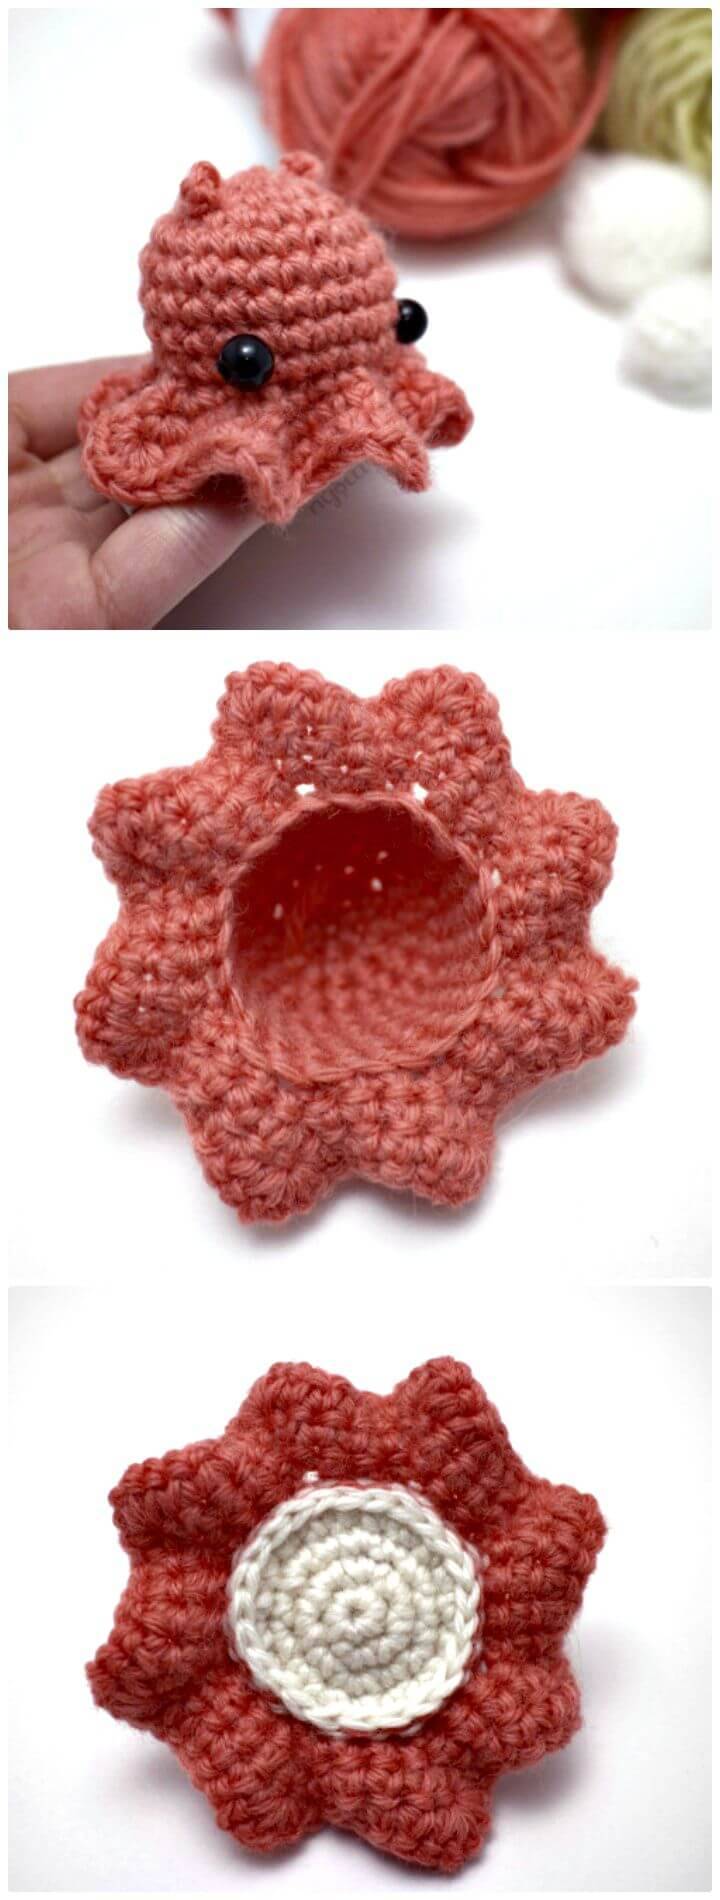 How To Crochet Dumbo Octopus Amigurumi Pattern